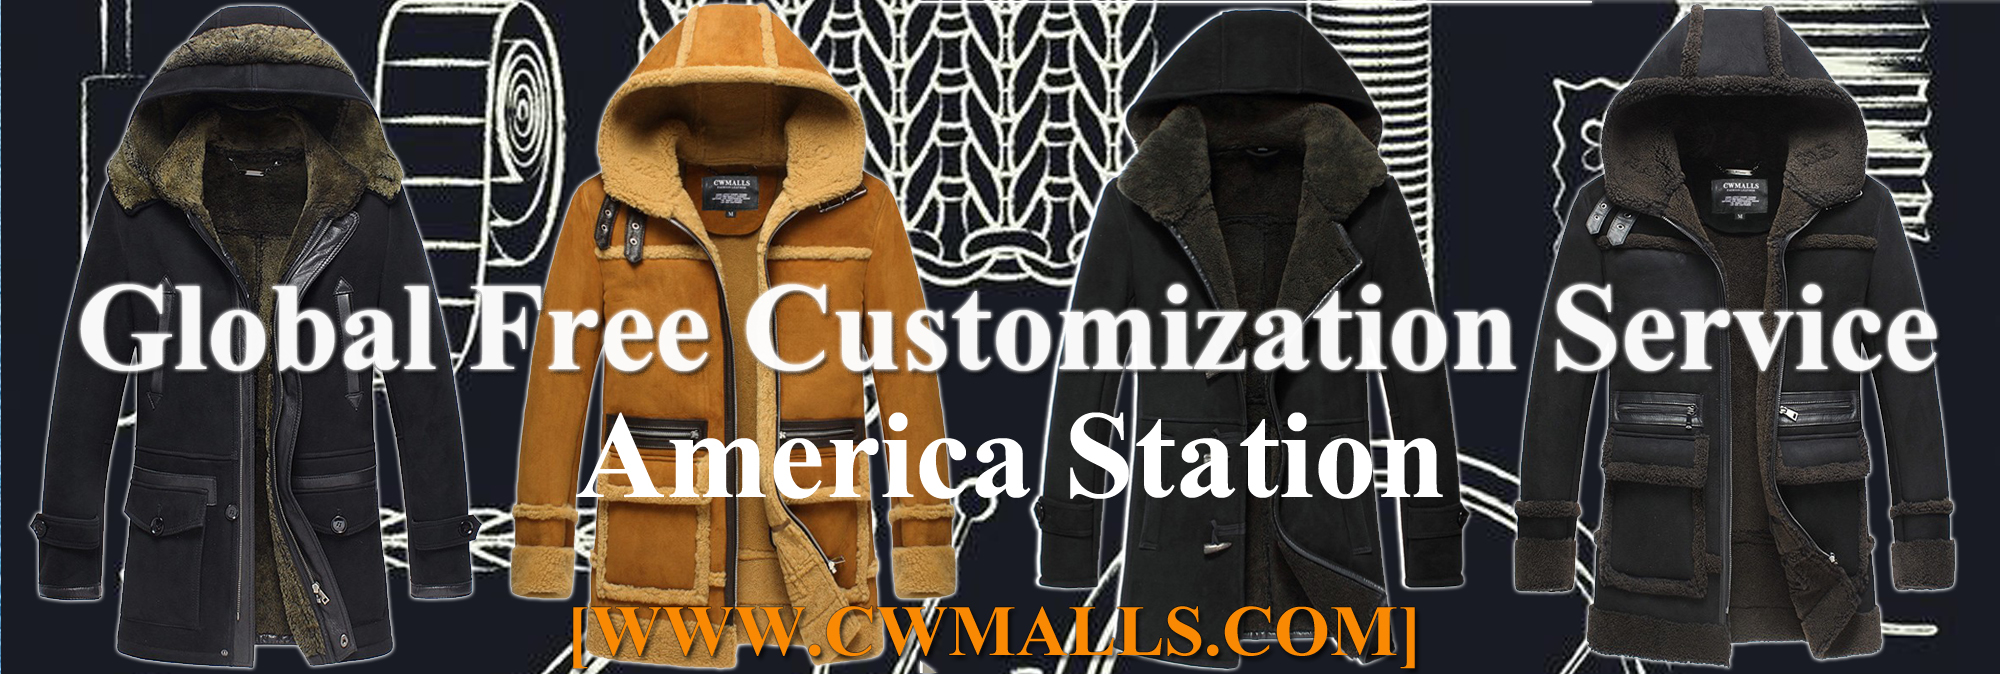 CWMALLS Global Free Customization ServiceAmerica Station 2